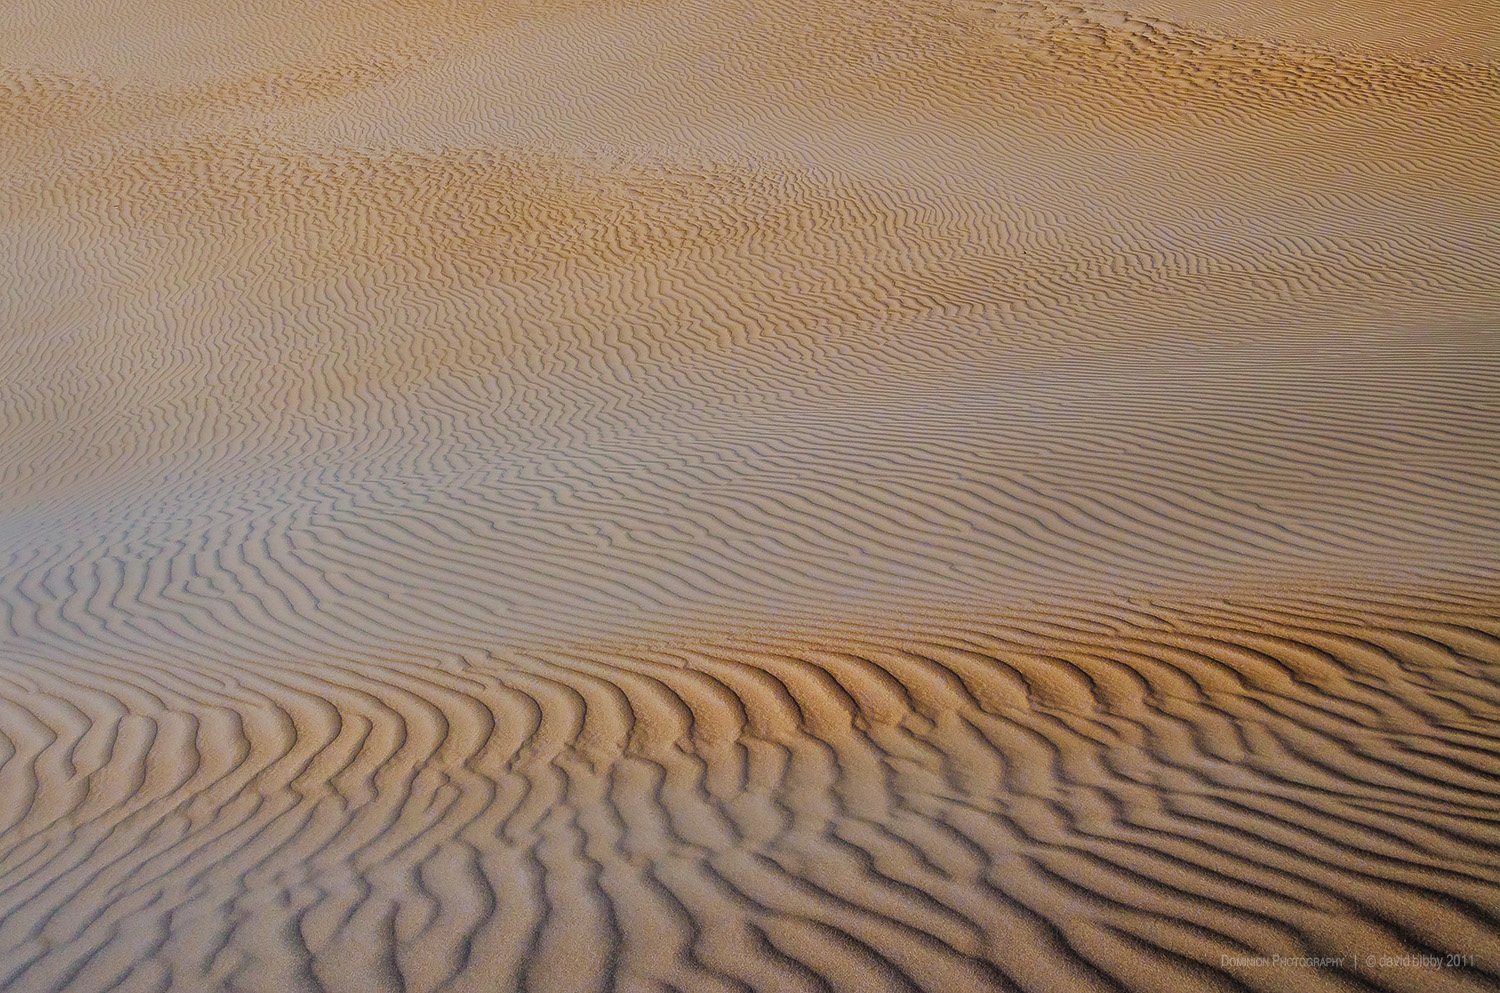  Little Sahara, Kangaroo Island, South Australia. 